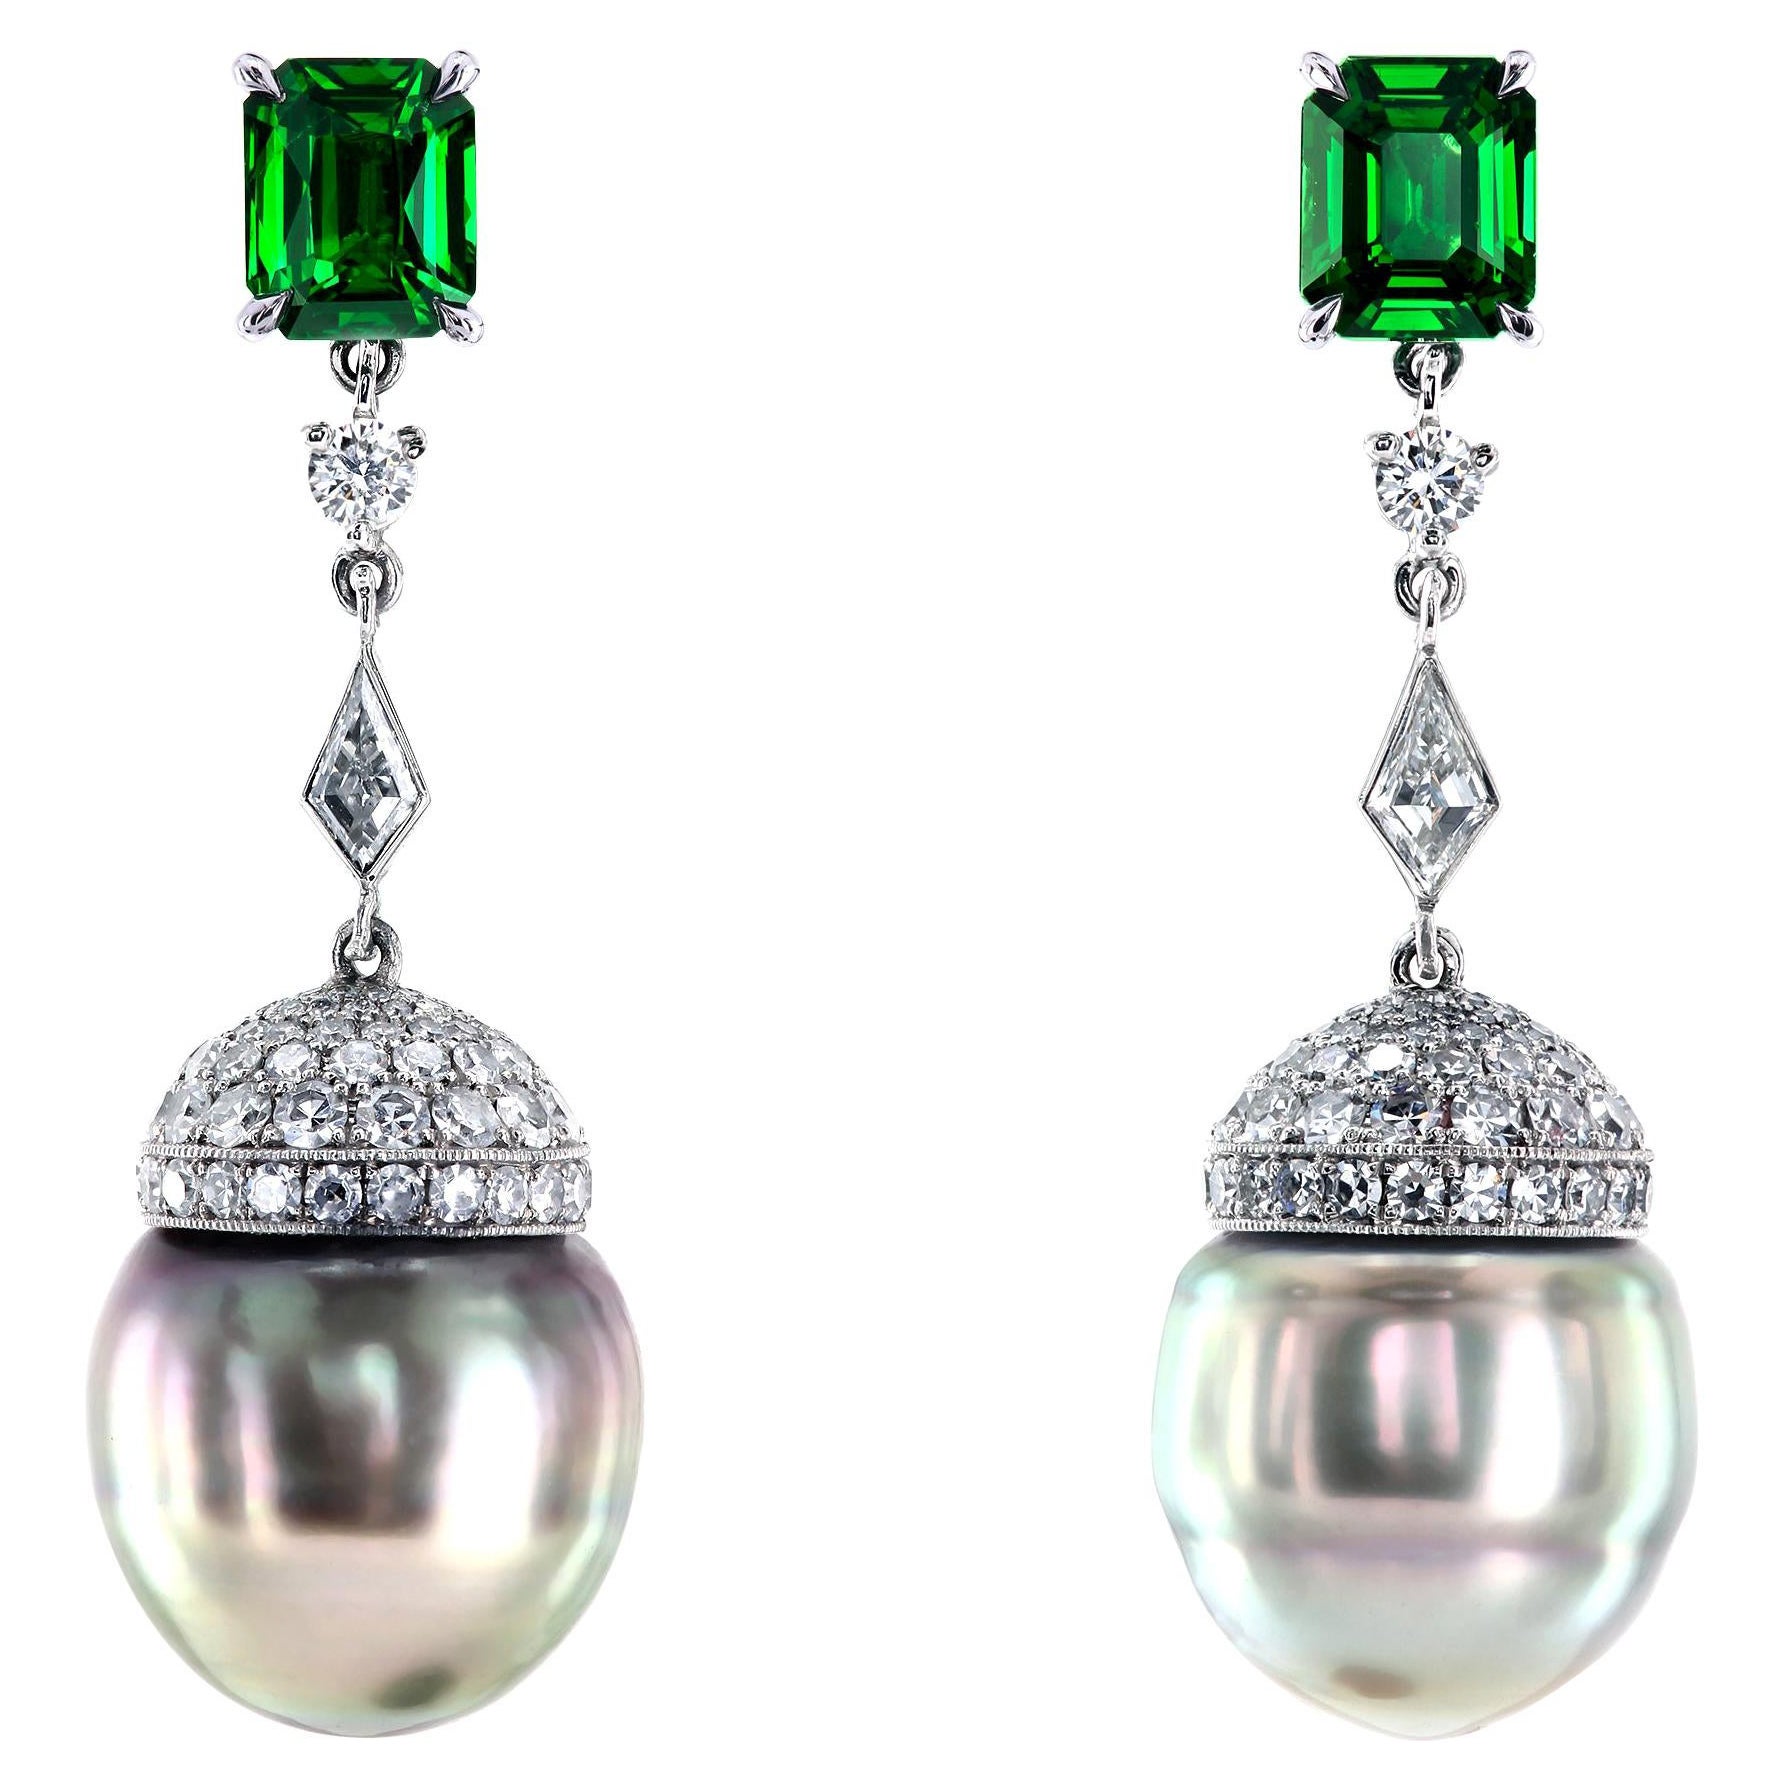 Leon Mege Bespoke Platinum Drop Earrings with Tsavorite Garnets and Grey Pearls For Sale